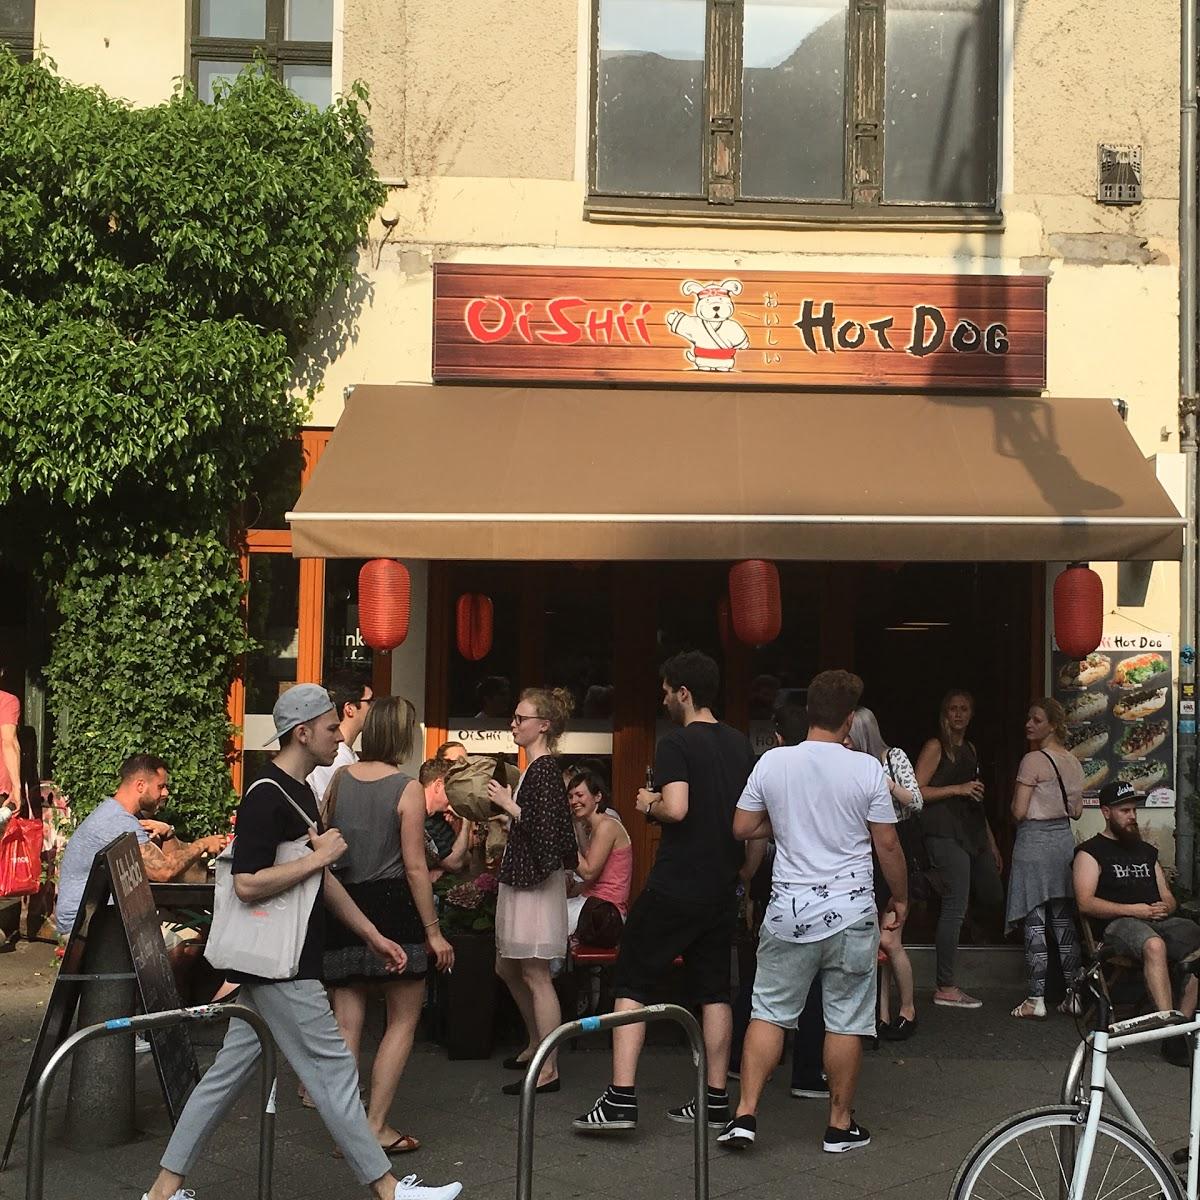 Restaurant "OiShii Hot Dog" in Berlin